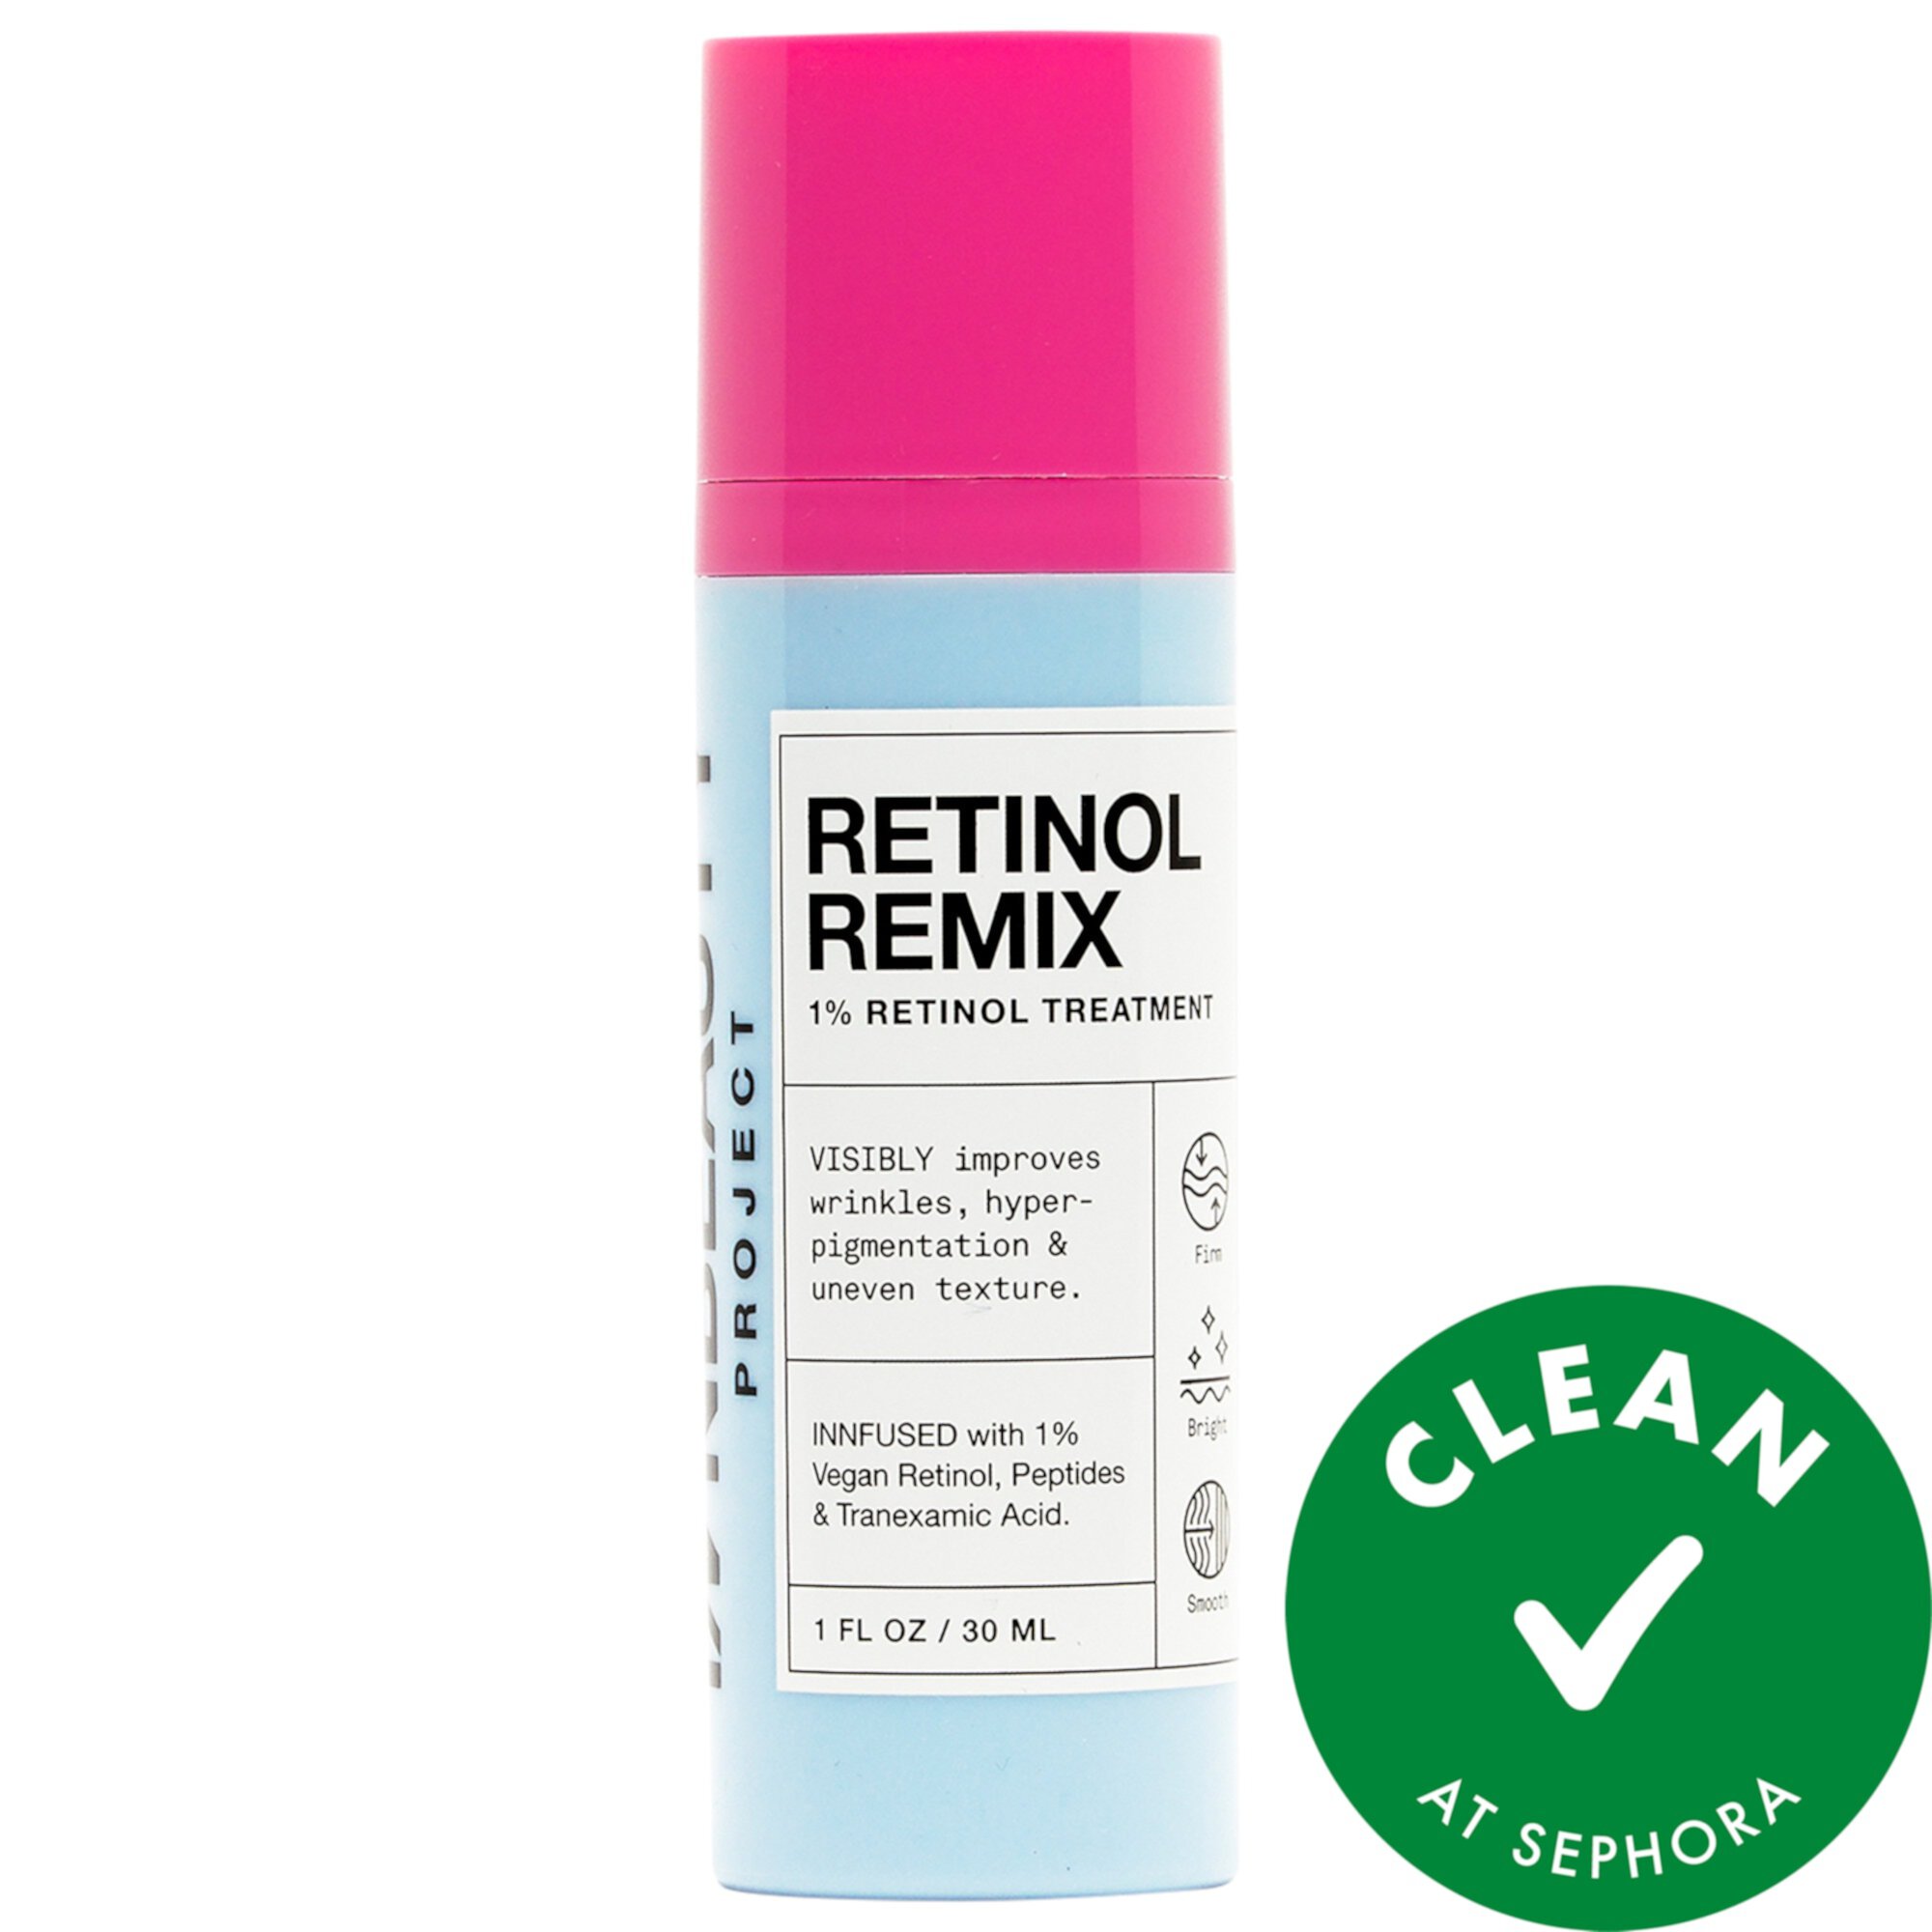 Retinol Remix 1% уход за ретинолом с пептидами и транексамовой кислотой INNBEAUTY PROJECT